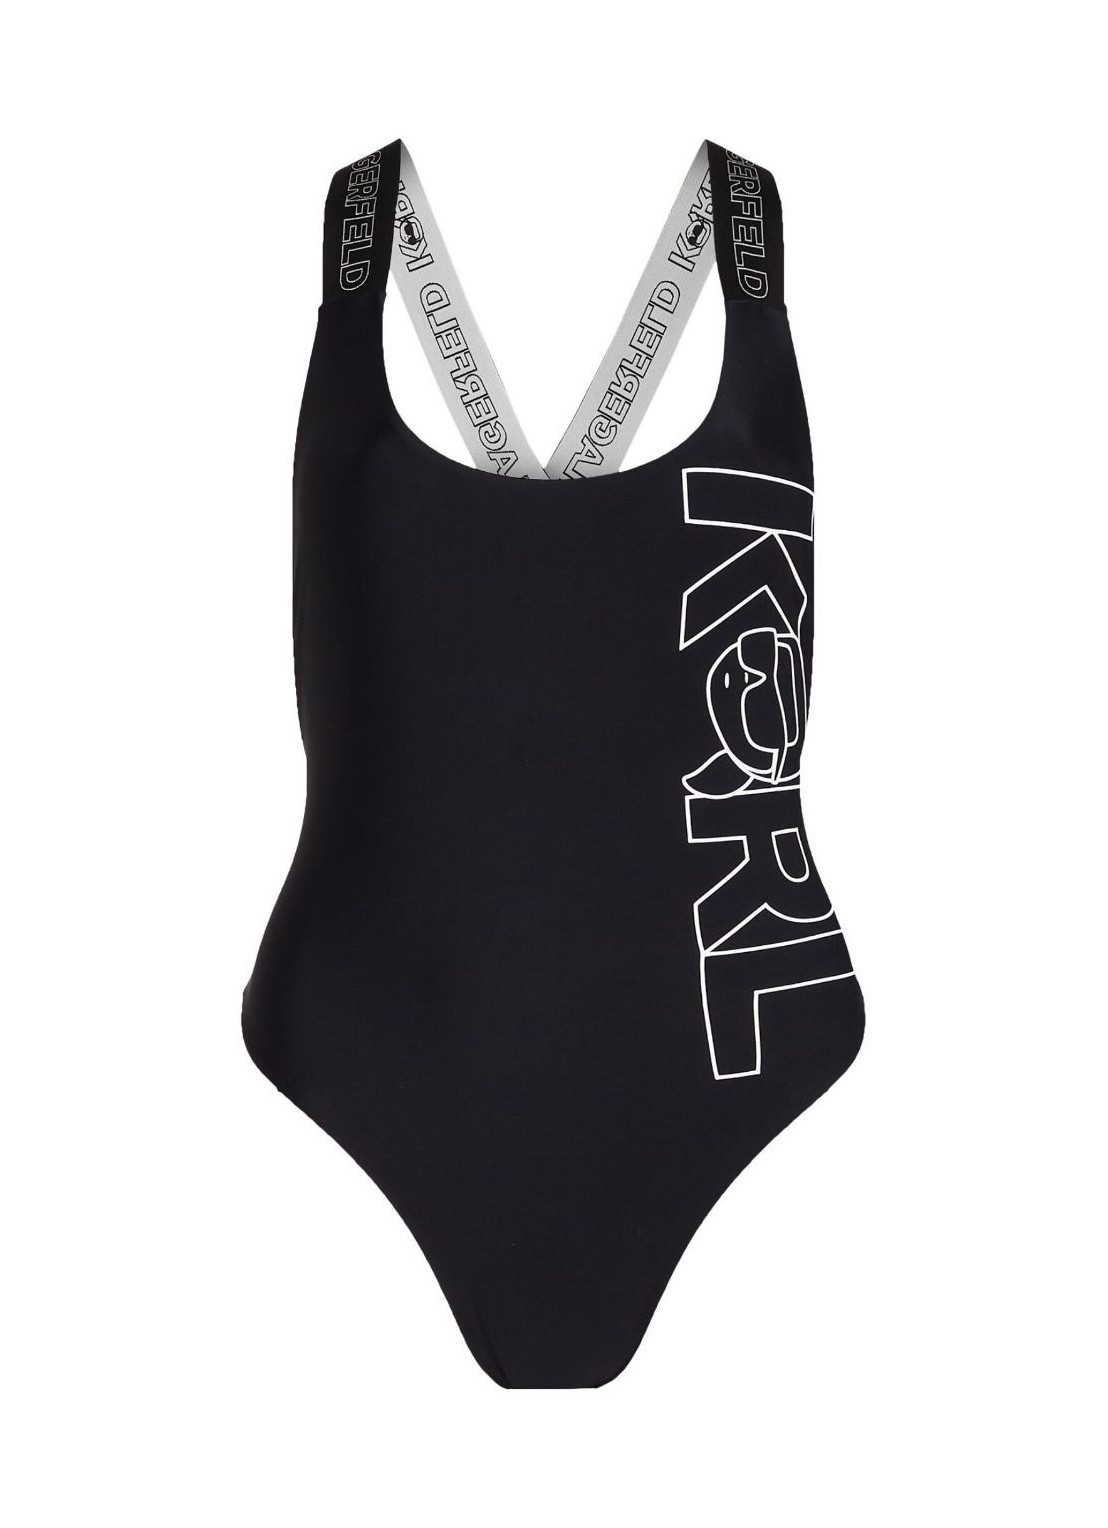 BaNador karl lagerfeld swimsuit woman ikonik 2.0 swimsuit w/ elastic 235w2228 999 talla XL
 